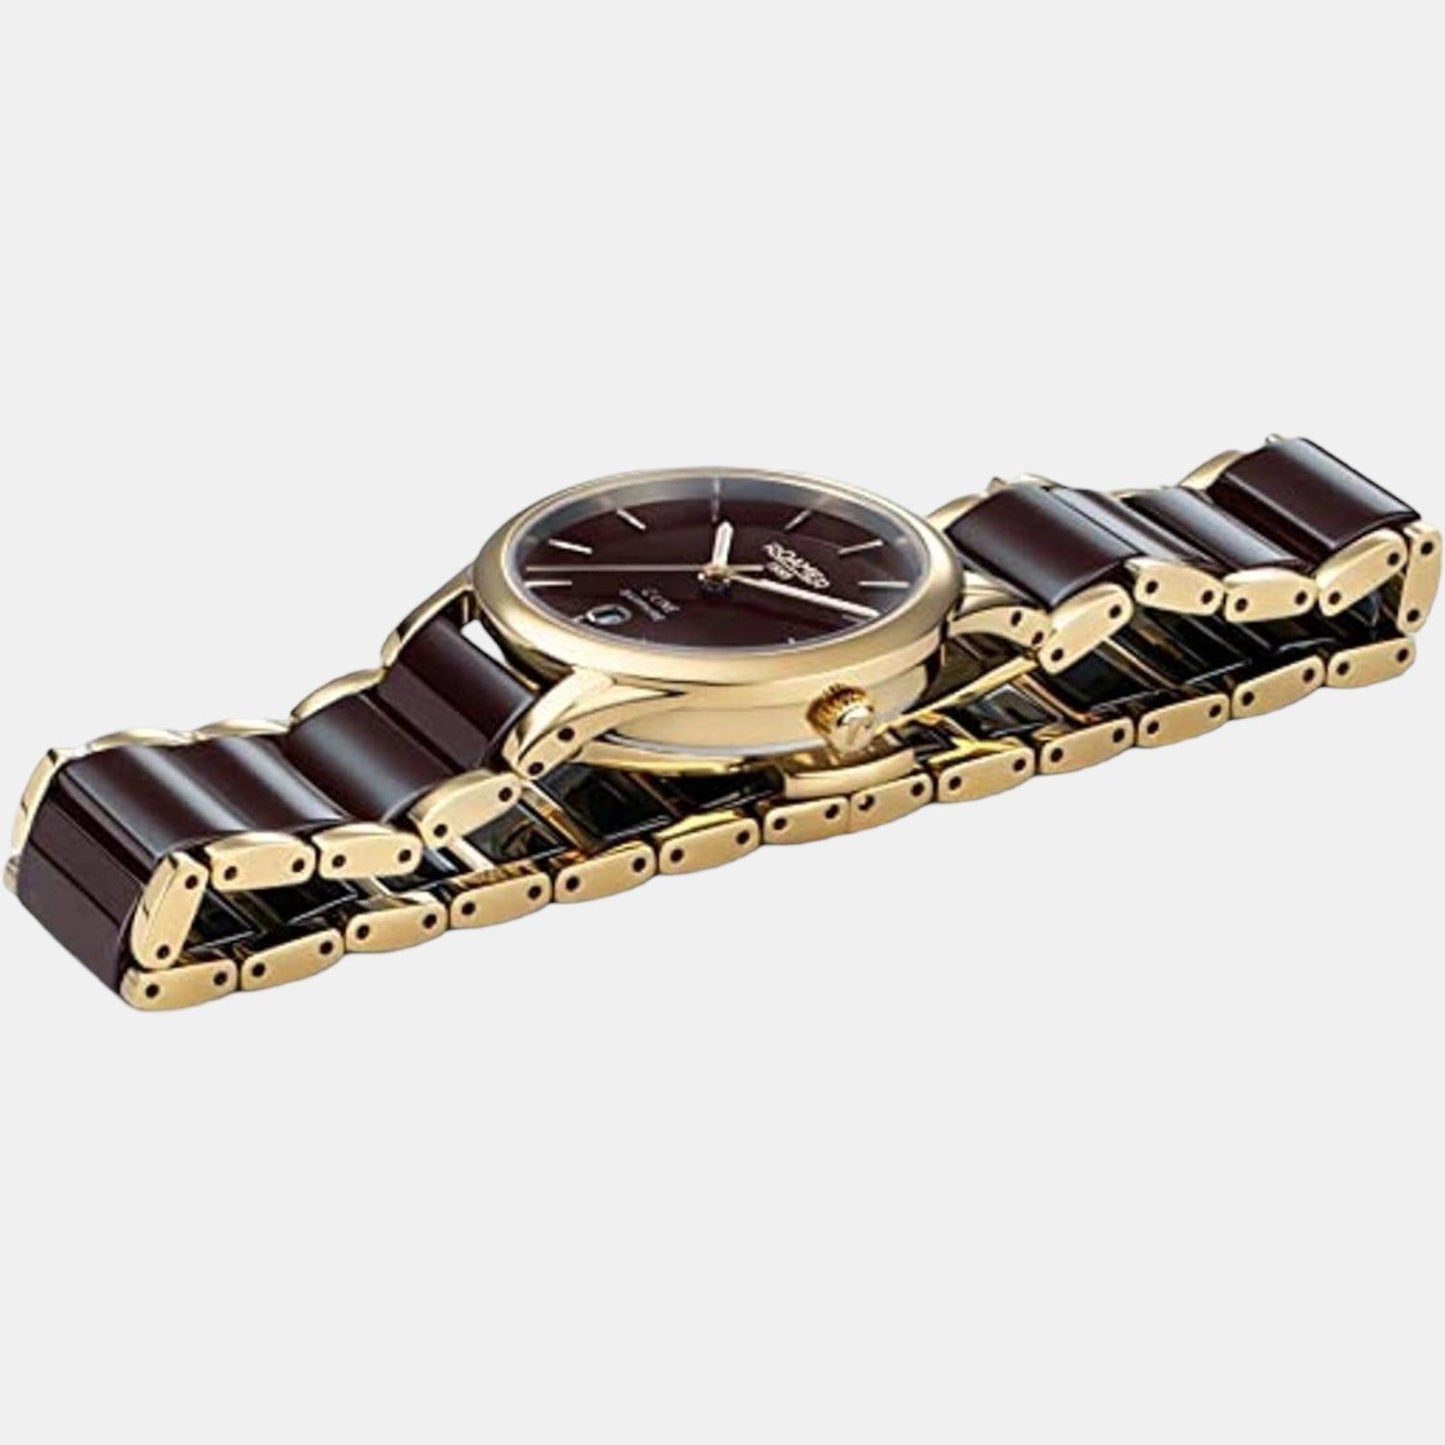 roamer-ceramic-brown-analog-female-watch-658844-48-65-63